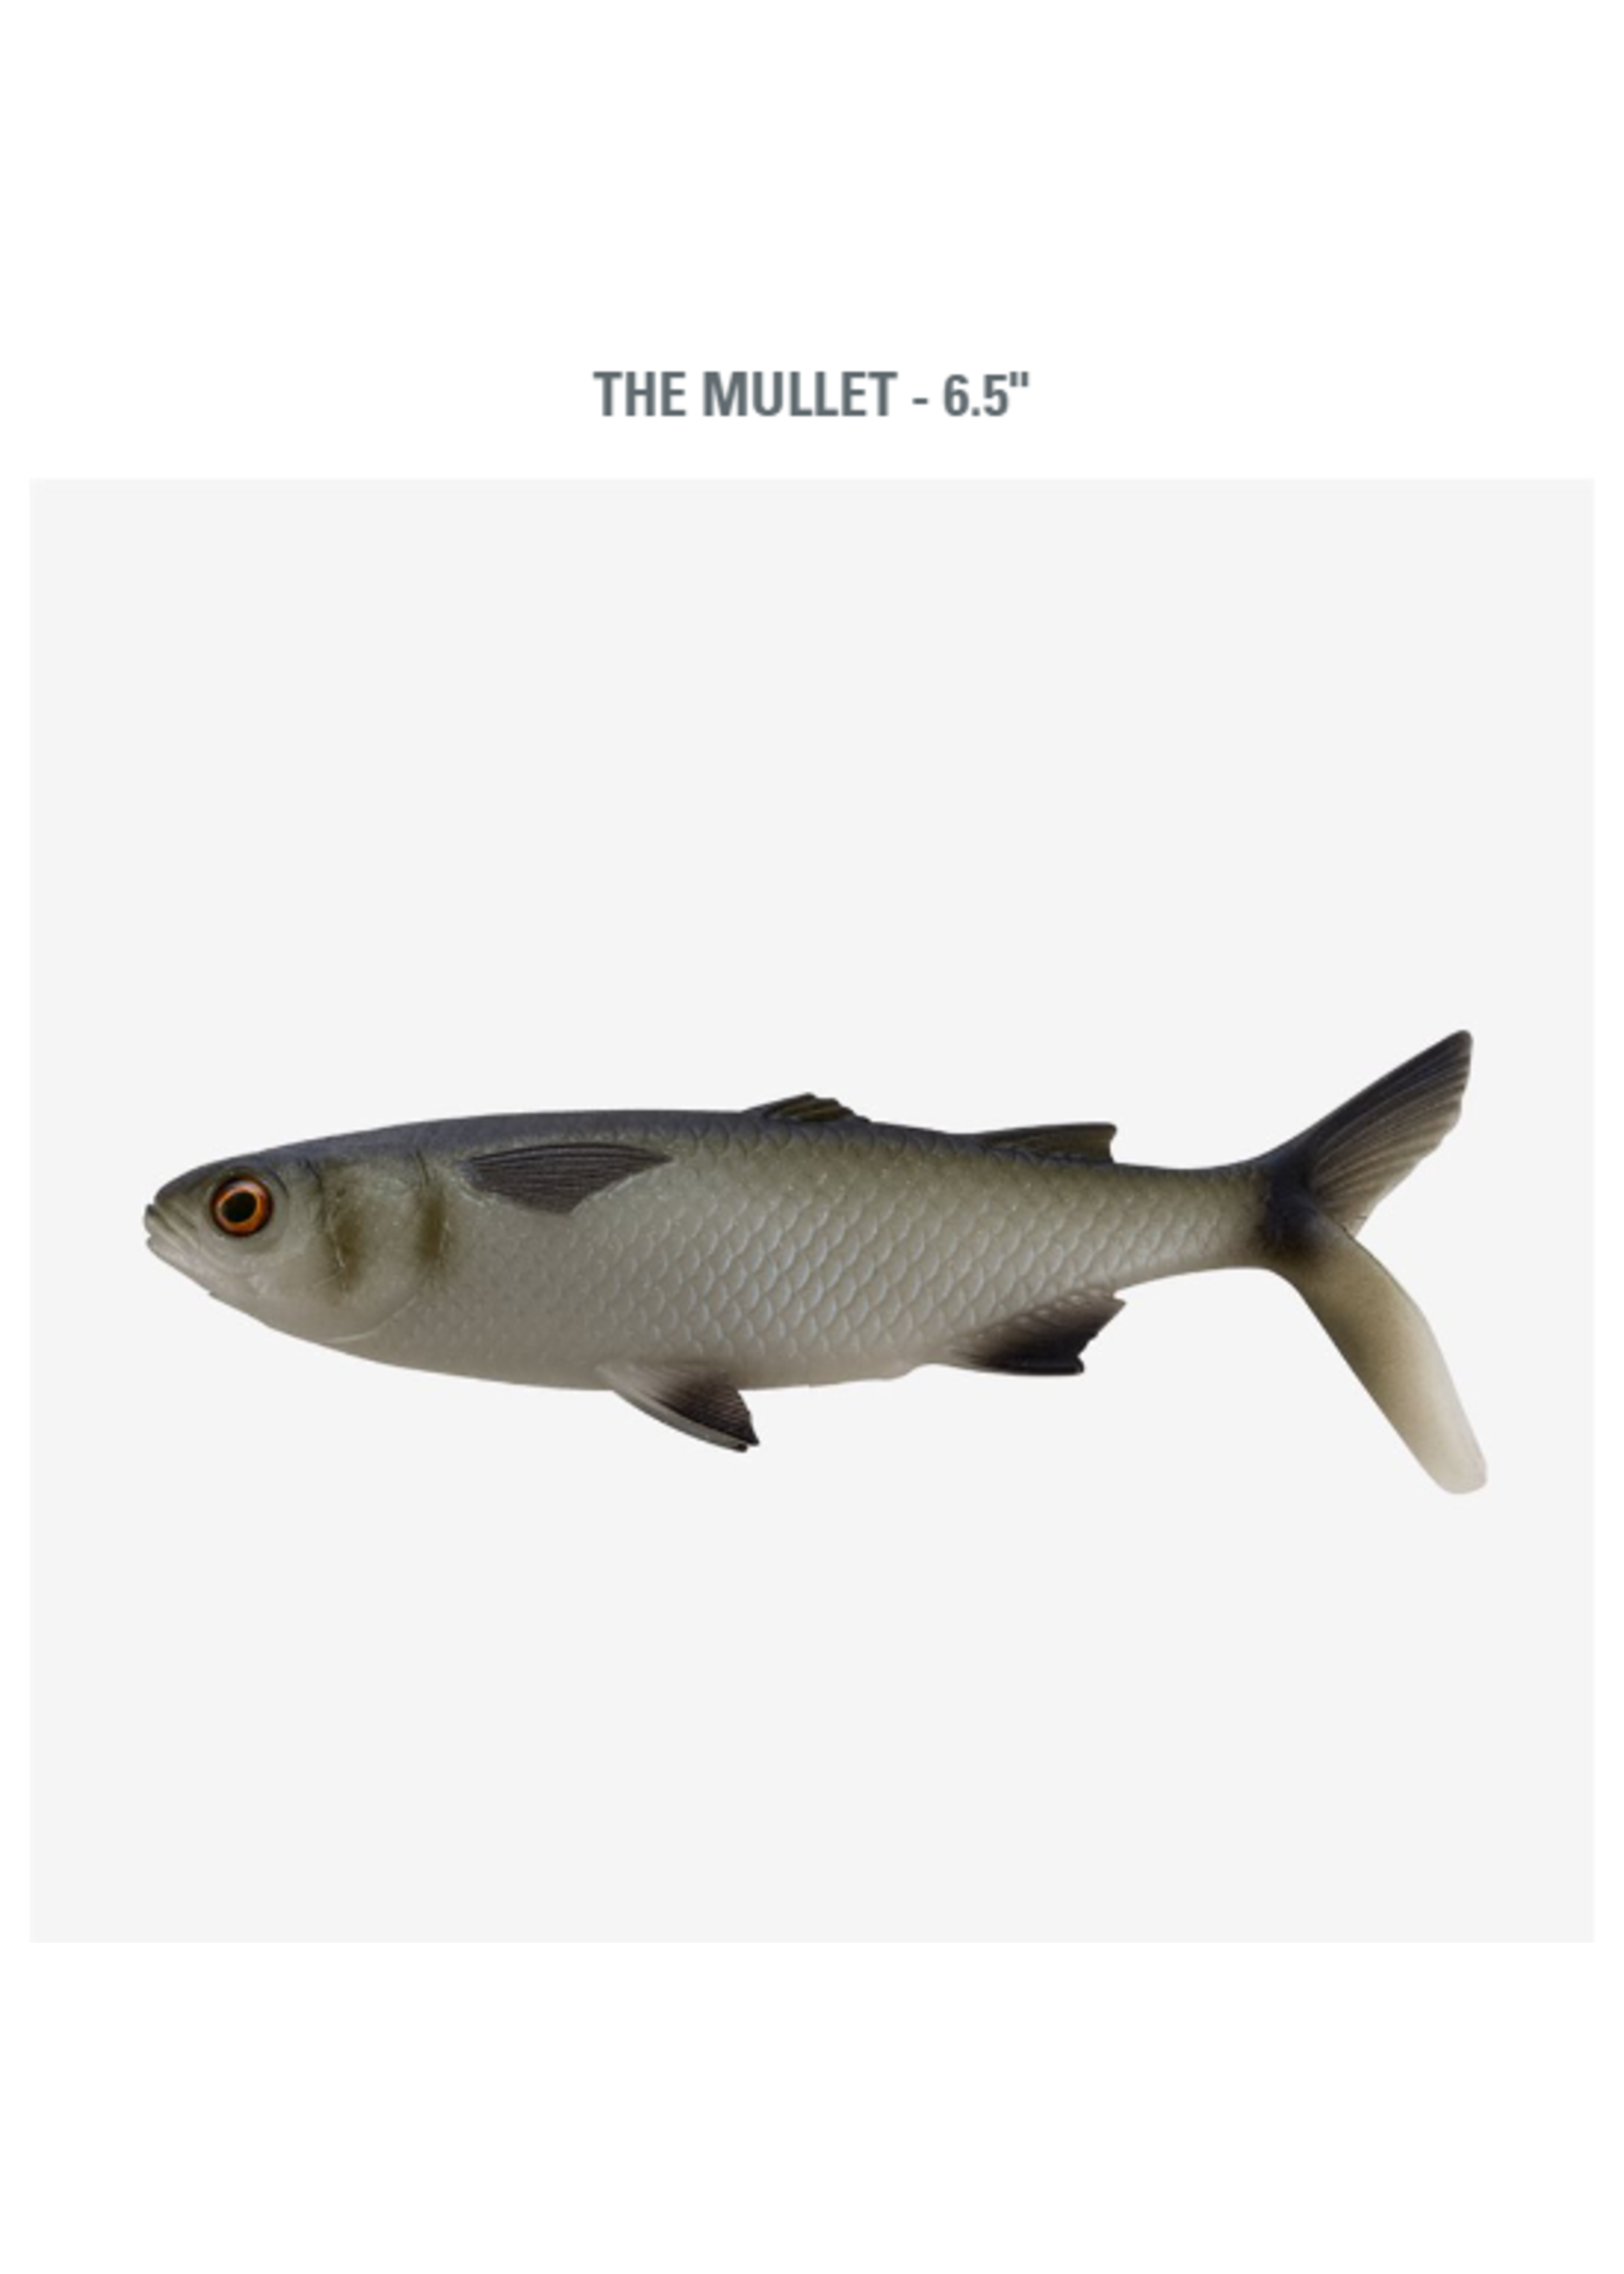 13 Fishing The Mullet - 6.5" - Natural